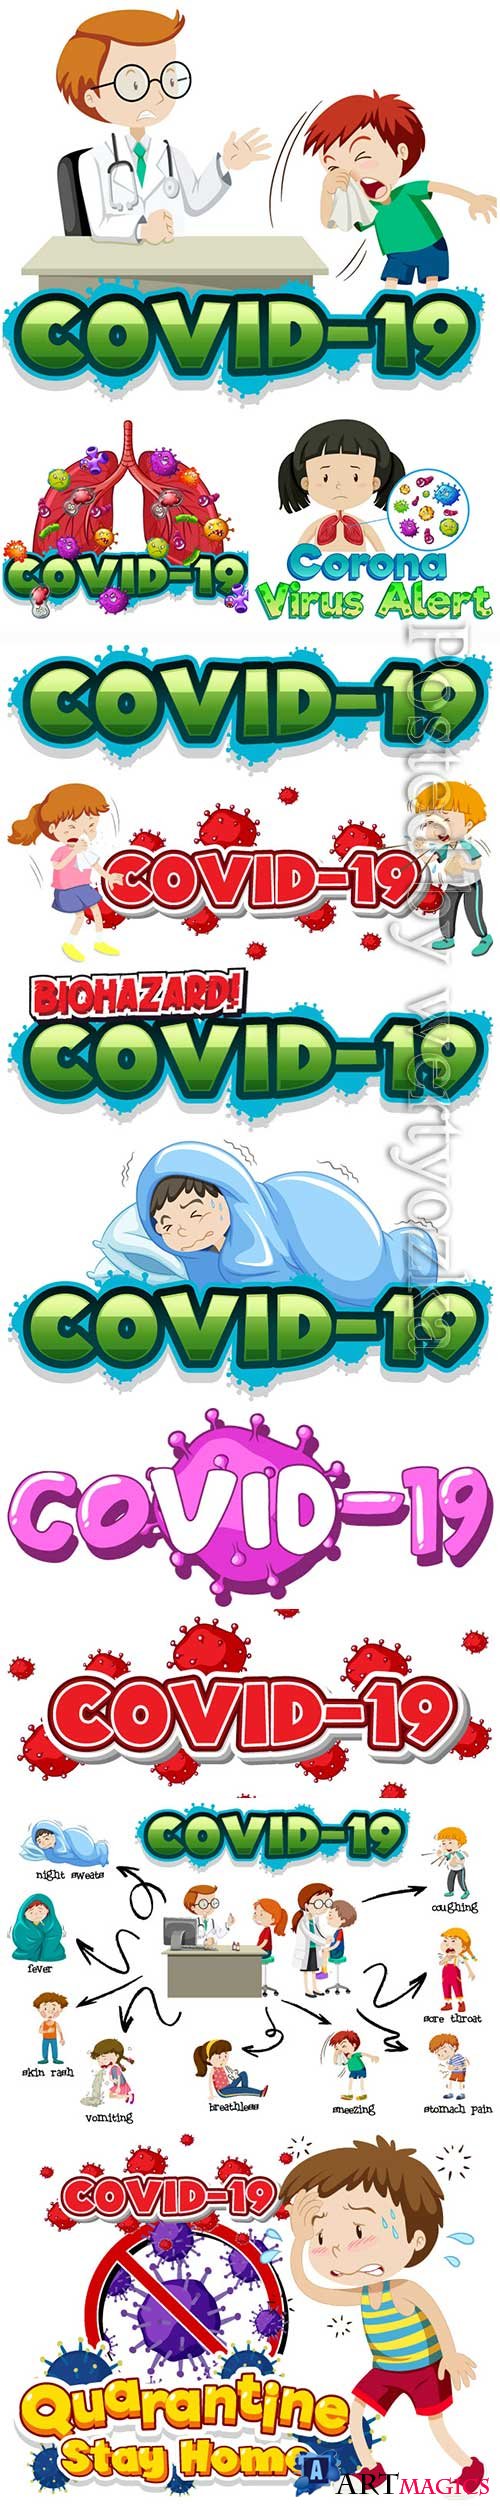 COVID 19, Coranavirus vector illustration sets # 20